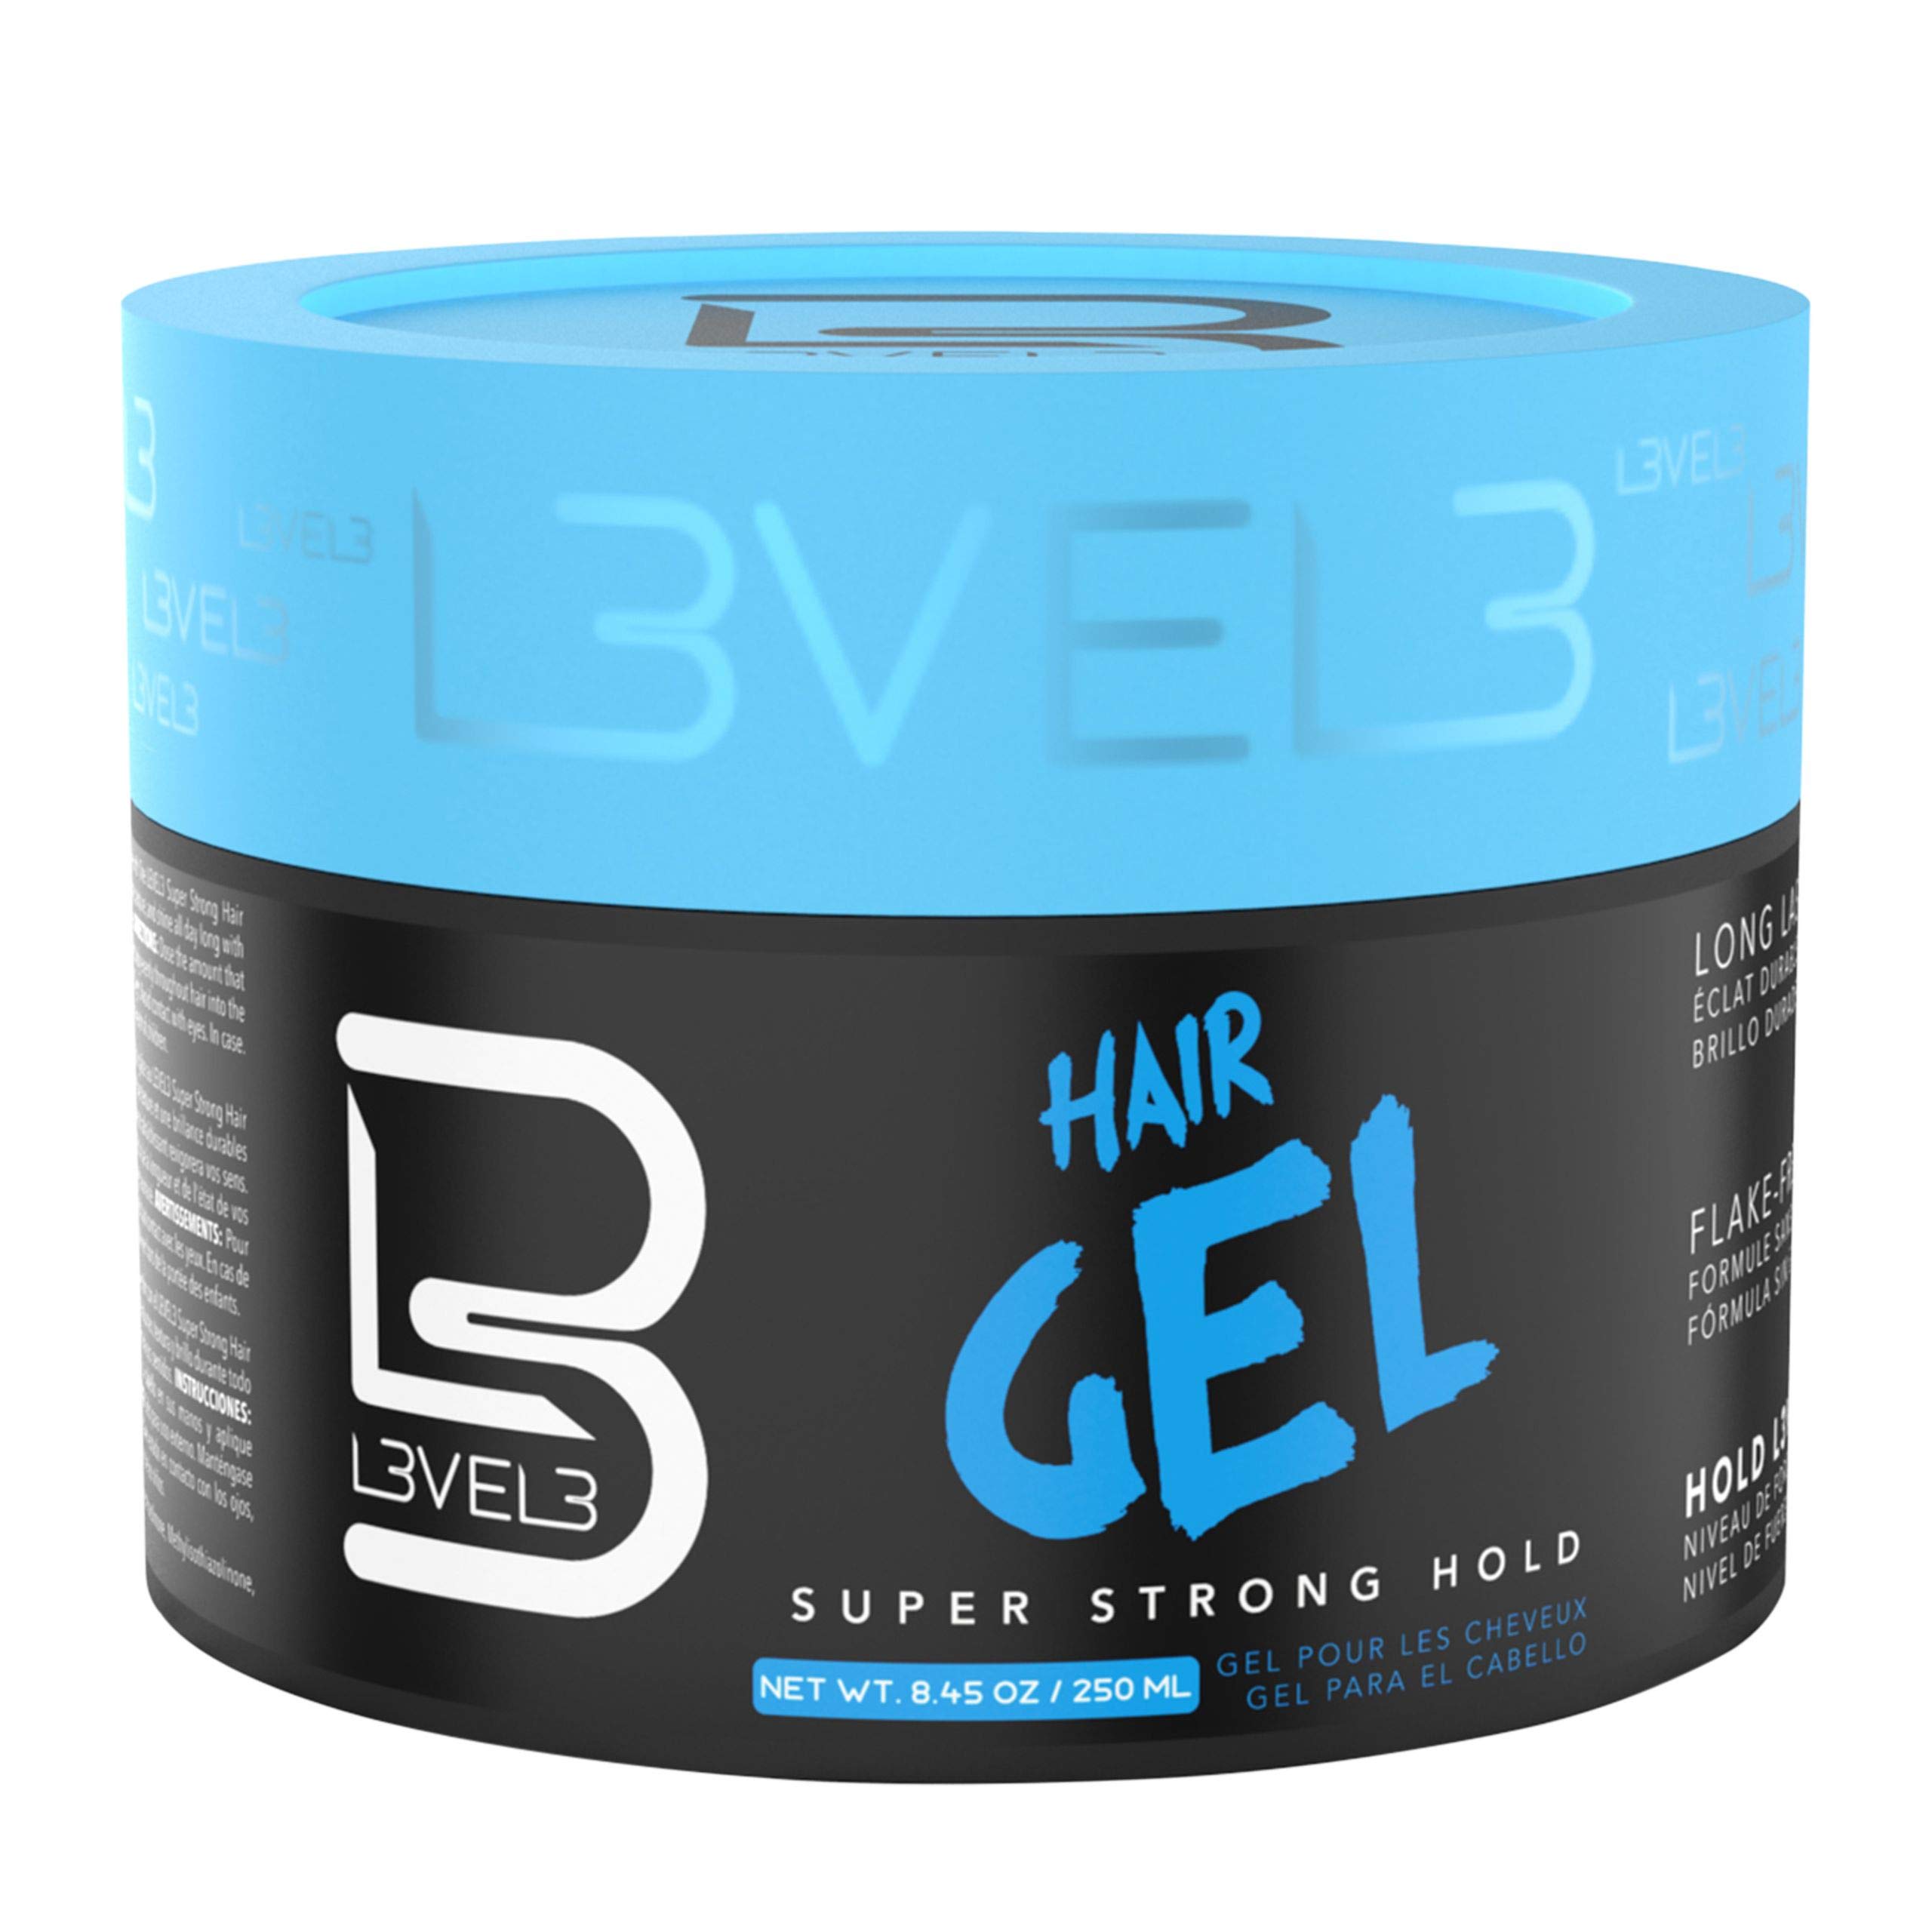 Enliven Extreme Hair Gel Hair Gel - Price in India, Buy Enliven Extreme Hair  Gel Hair Gel Online In India, Reviews, Ratings & Features | Flipkart.com